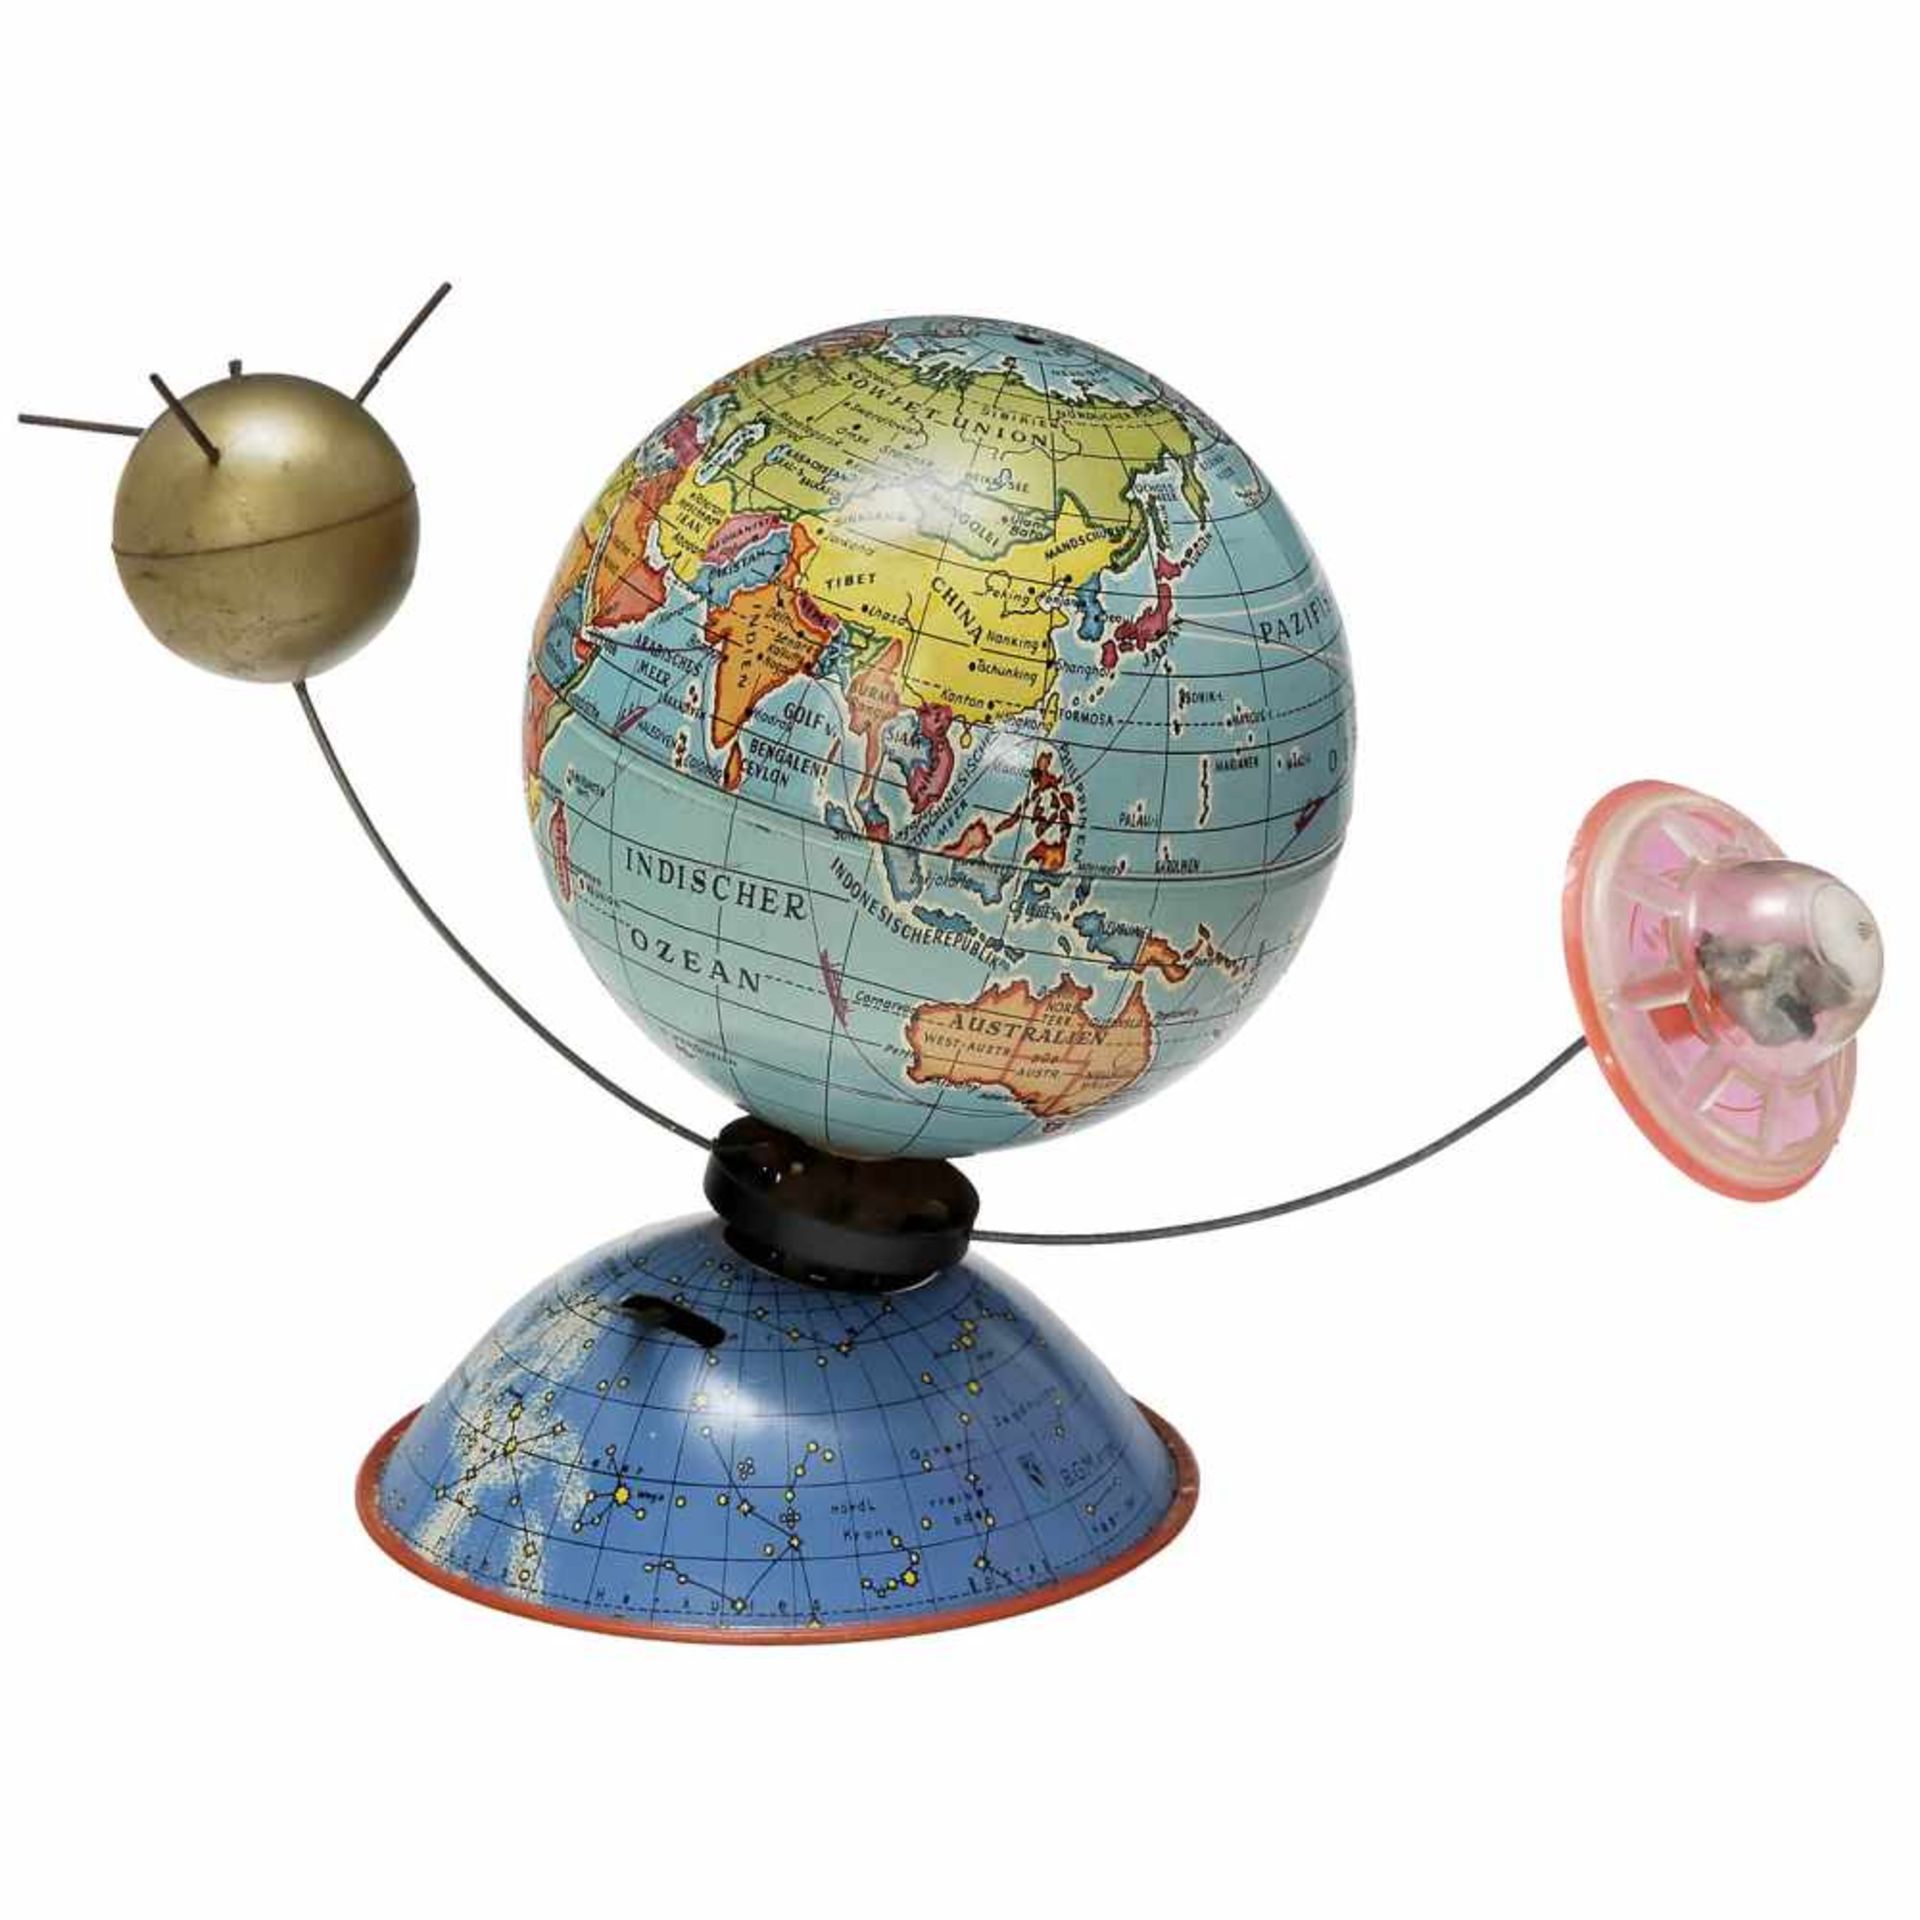 Globe by Michael Seidel, c. 1958MS-Spielwaren, Zirndorf, Germany. With sputnik and flying saucer